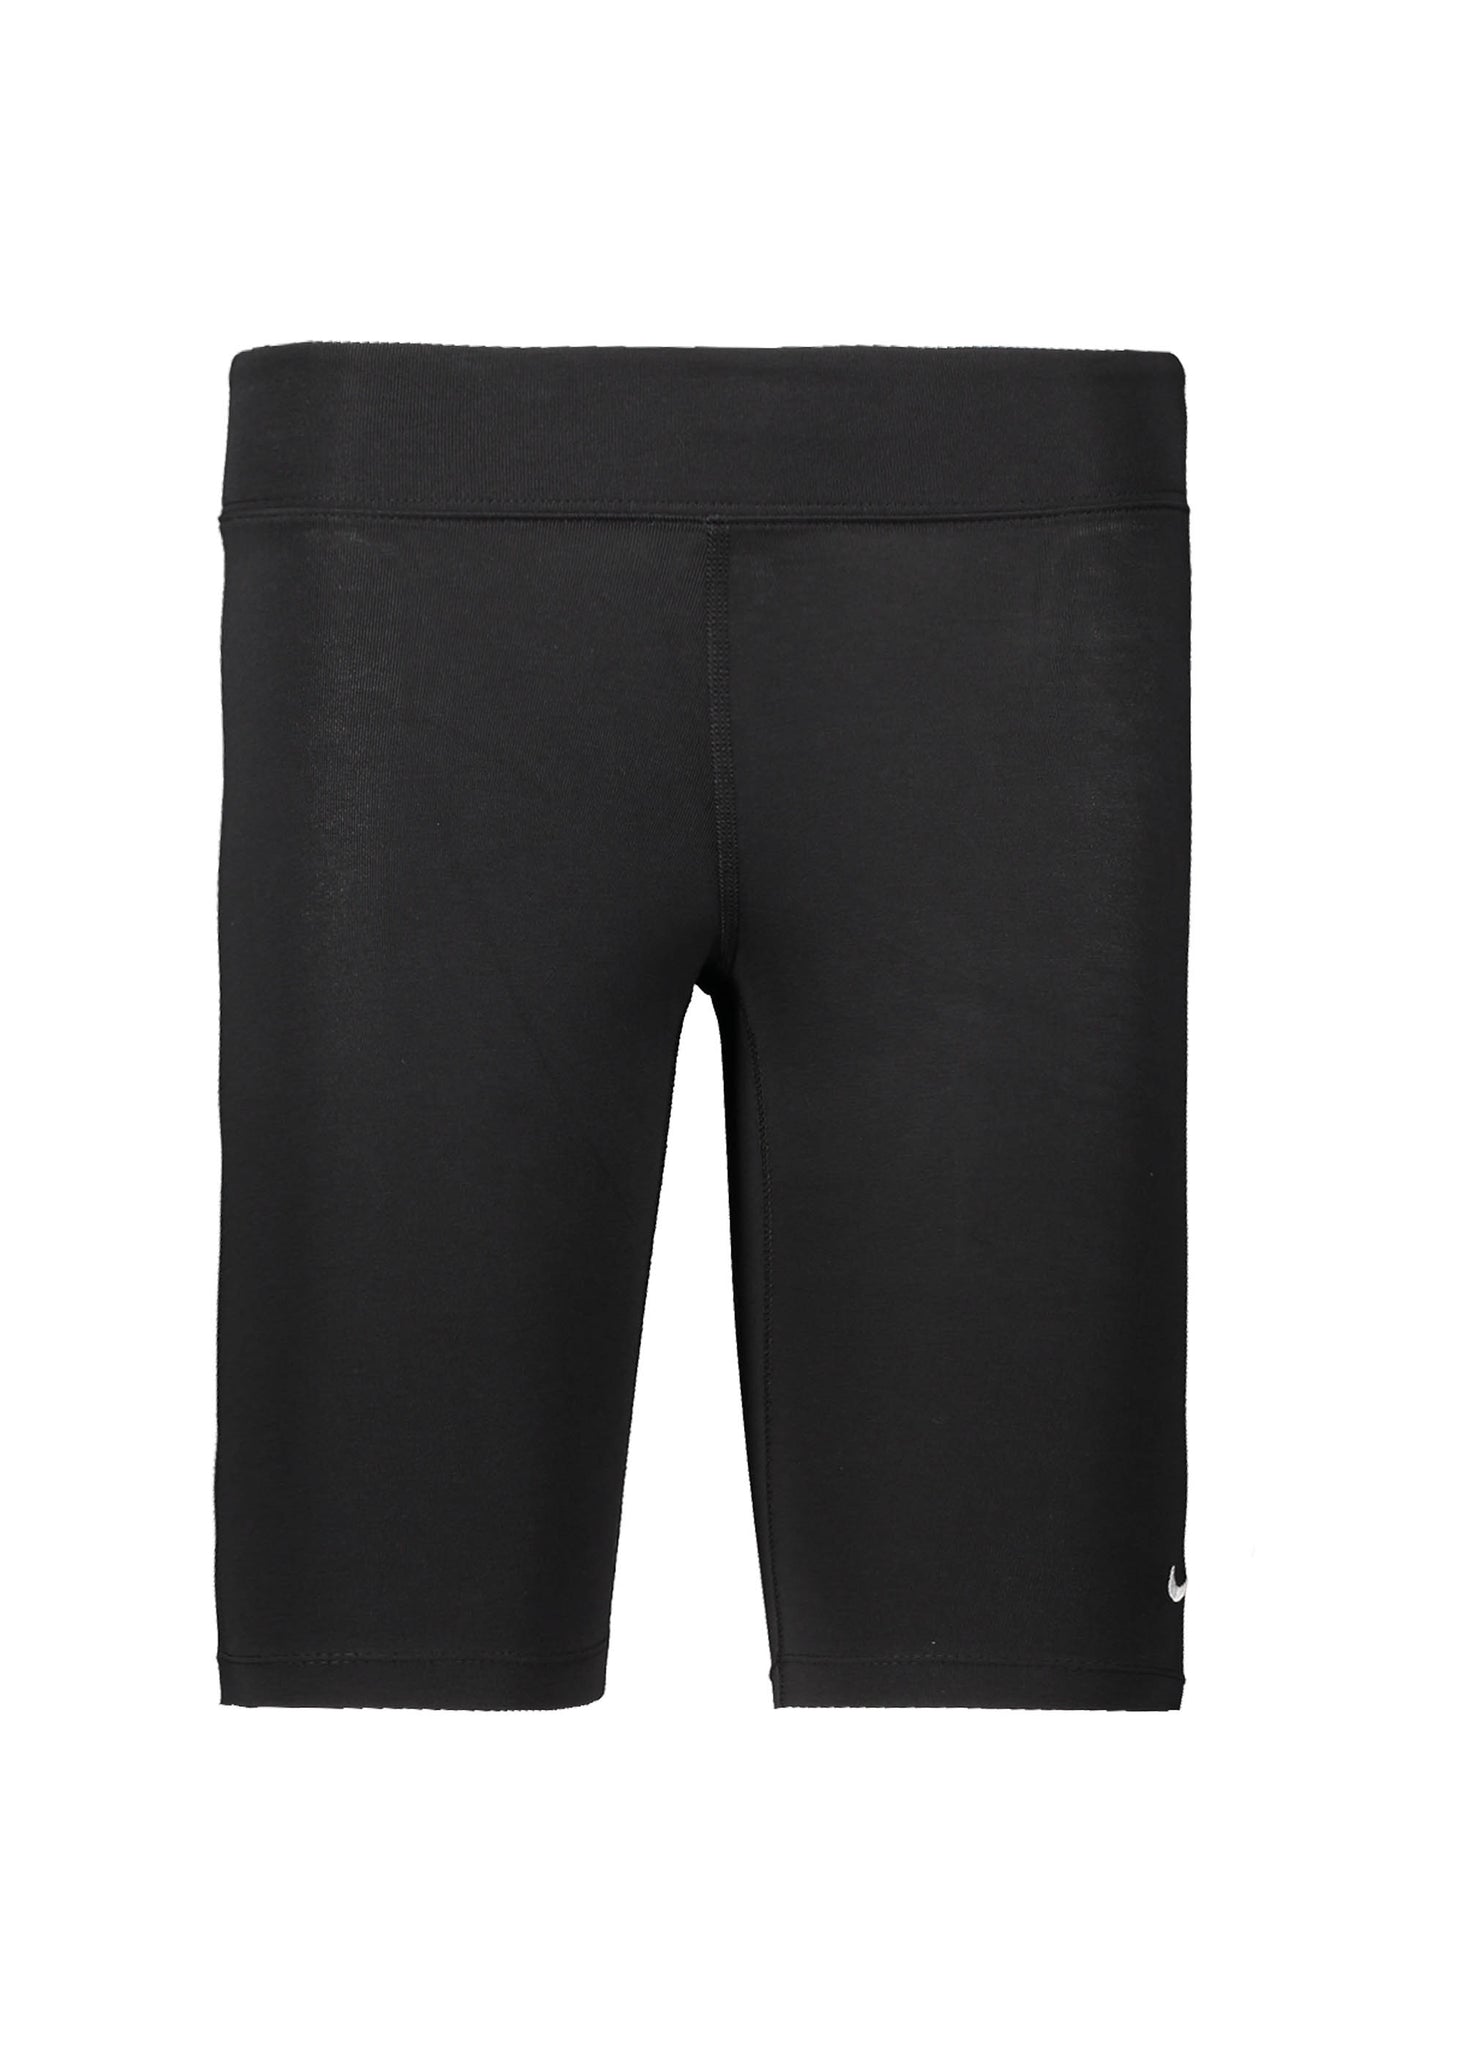 NSW Bike Shorts - Black